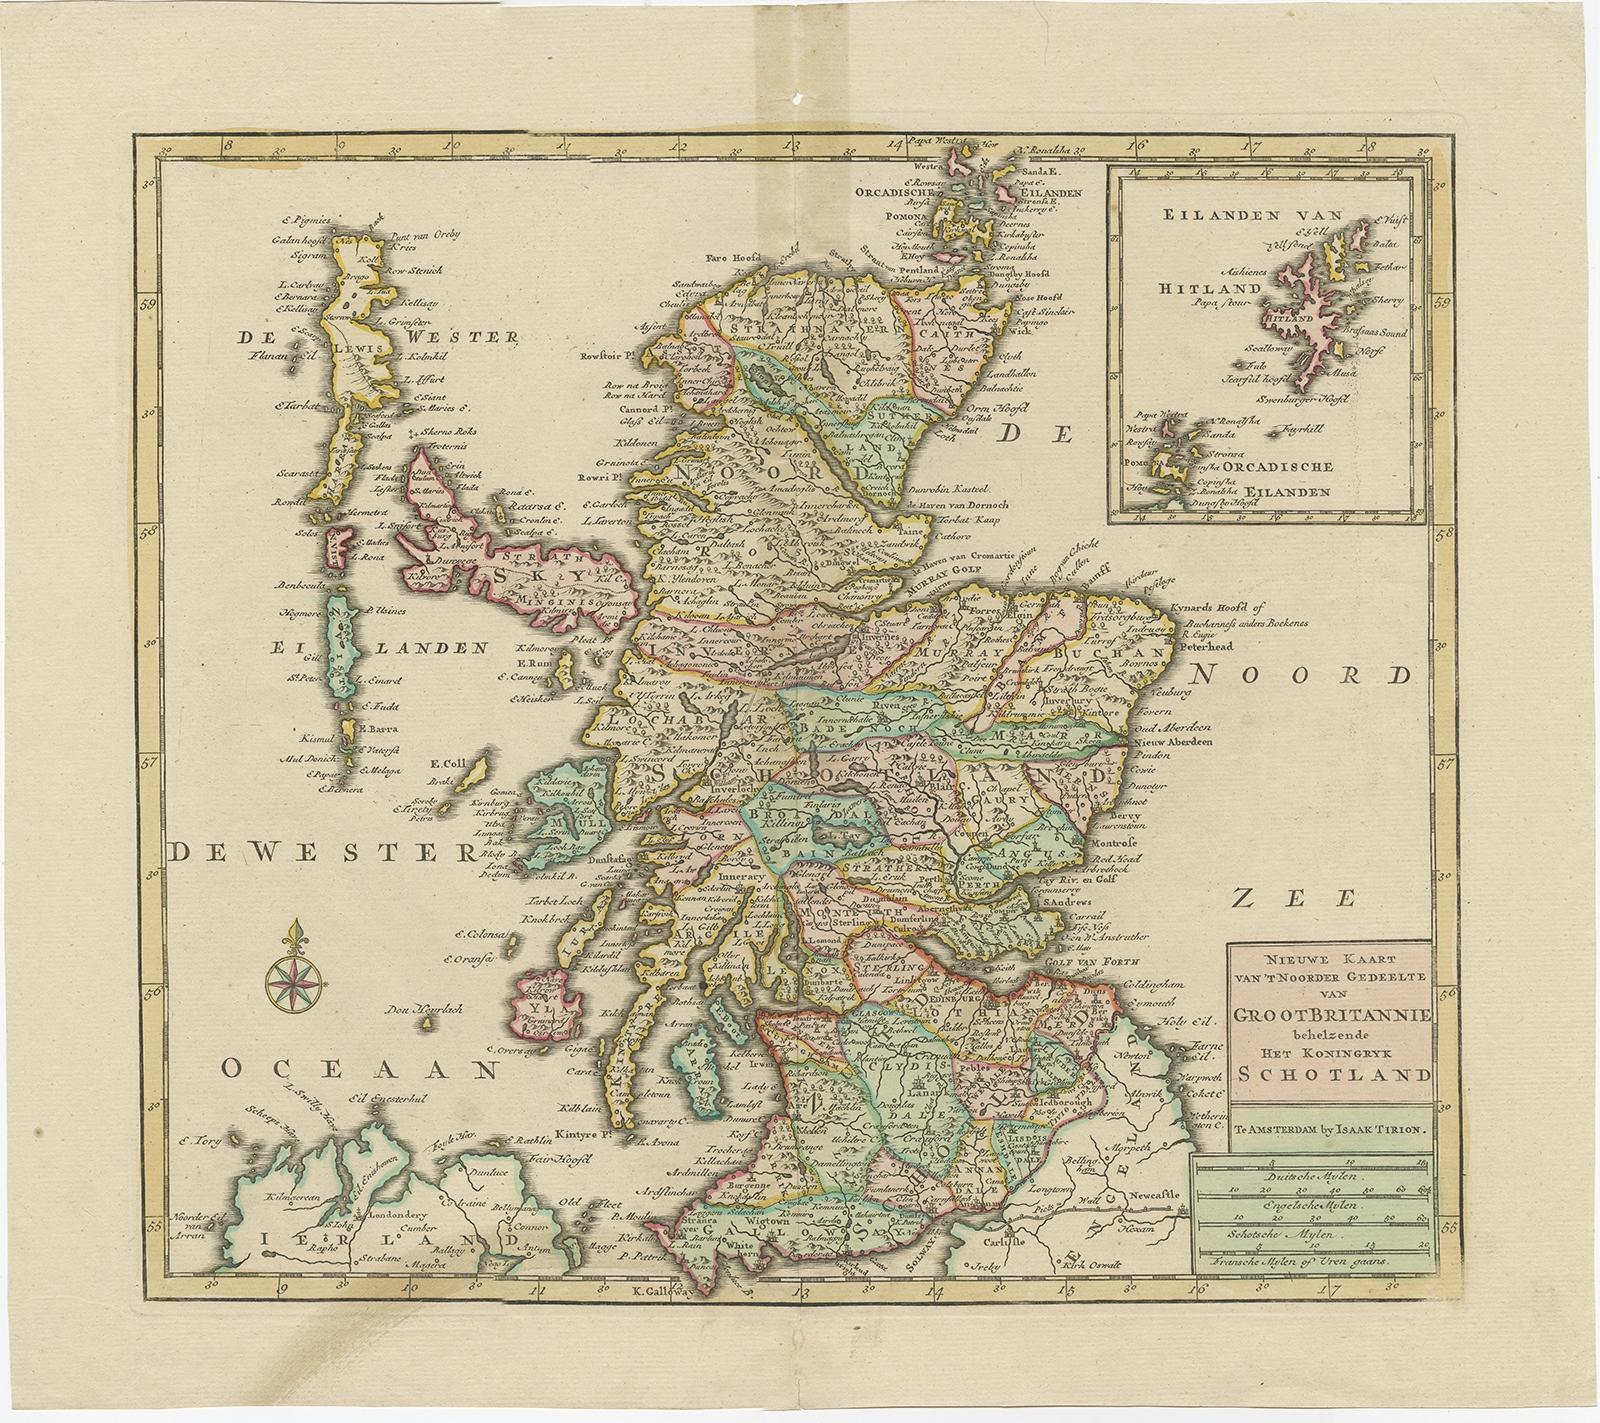 Antique map Scotland titled 'Nieuwe Kaart van 't Noorder Gedeelte van GrootBritannie behelzende het Koningryk Schotland'. 

Antique map of Scotland and the Western Islands. With an inset map of the Orkney and Shetland Islands.

Artists and